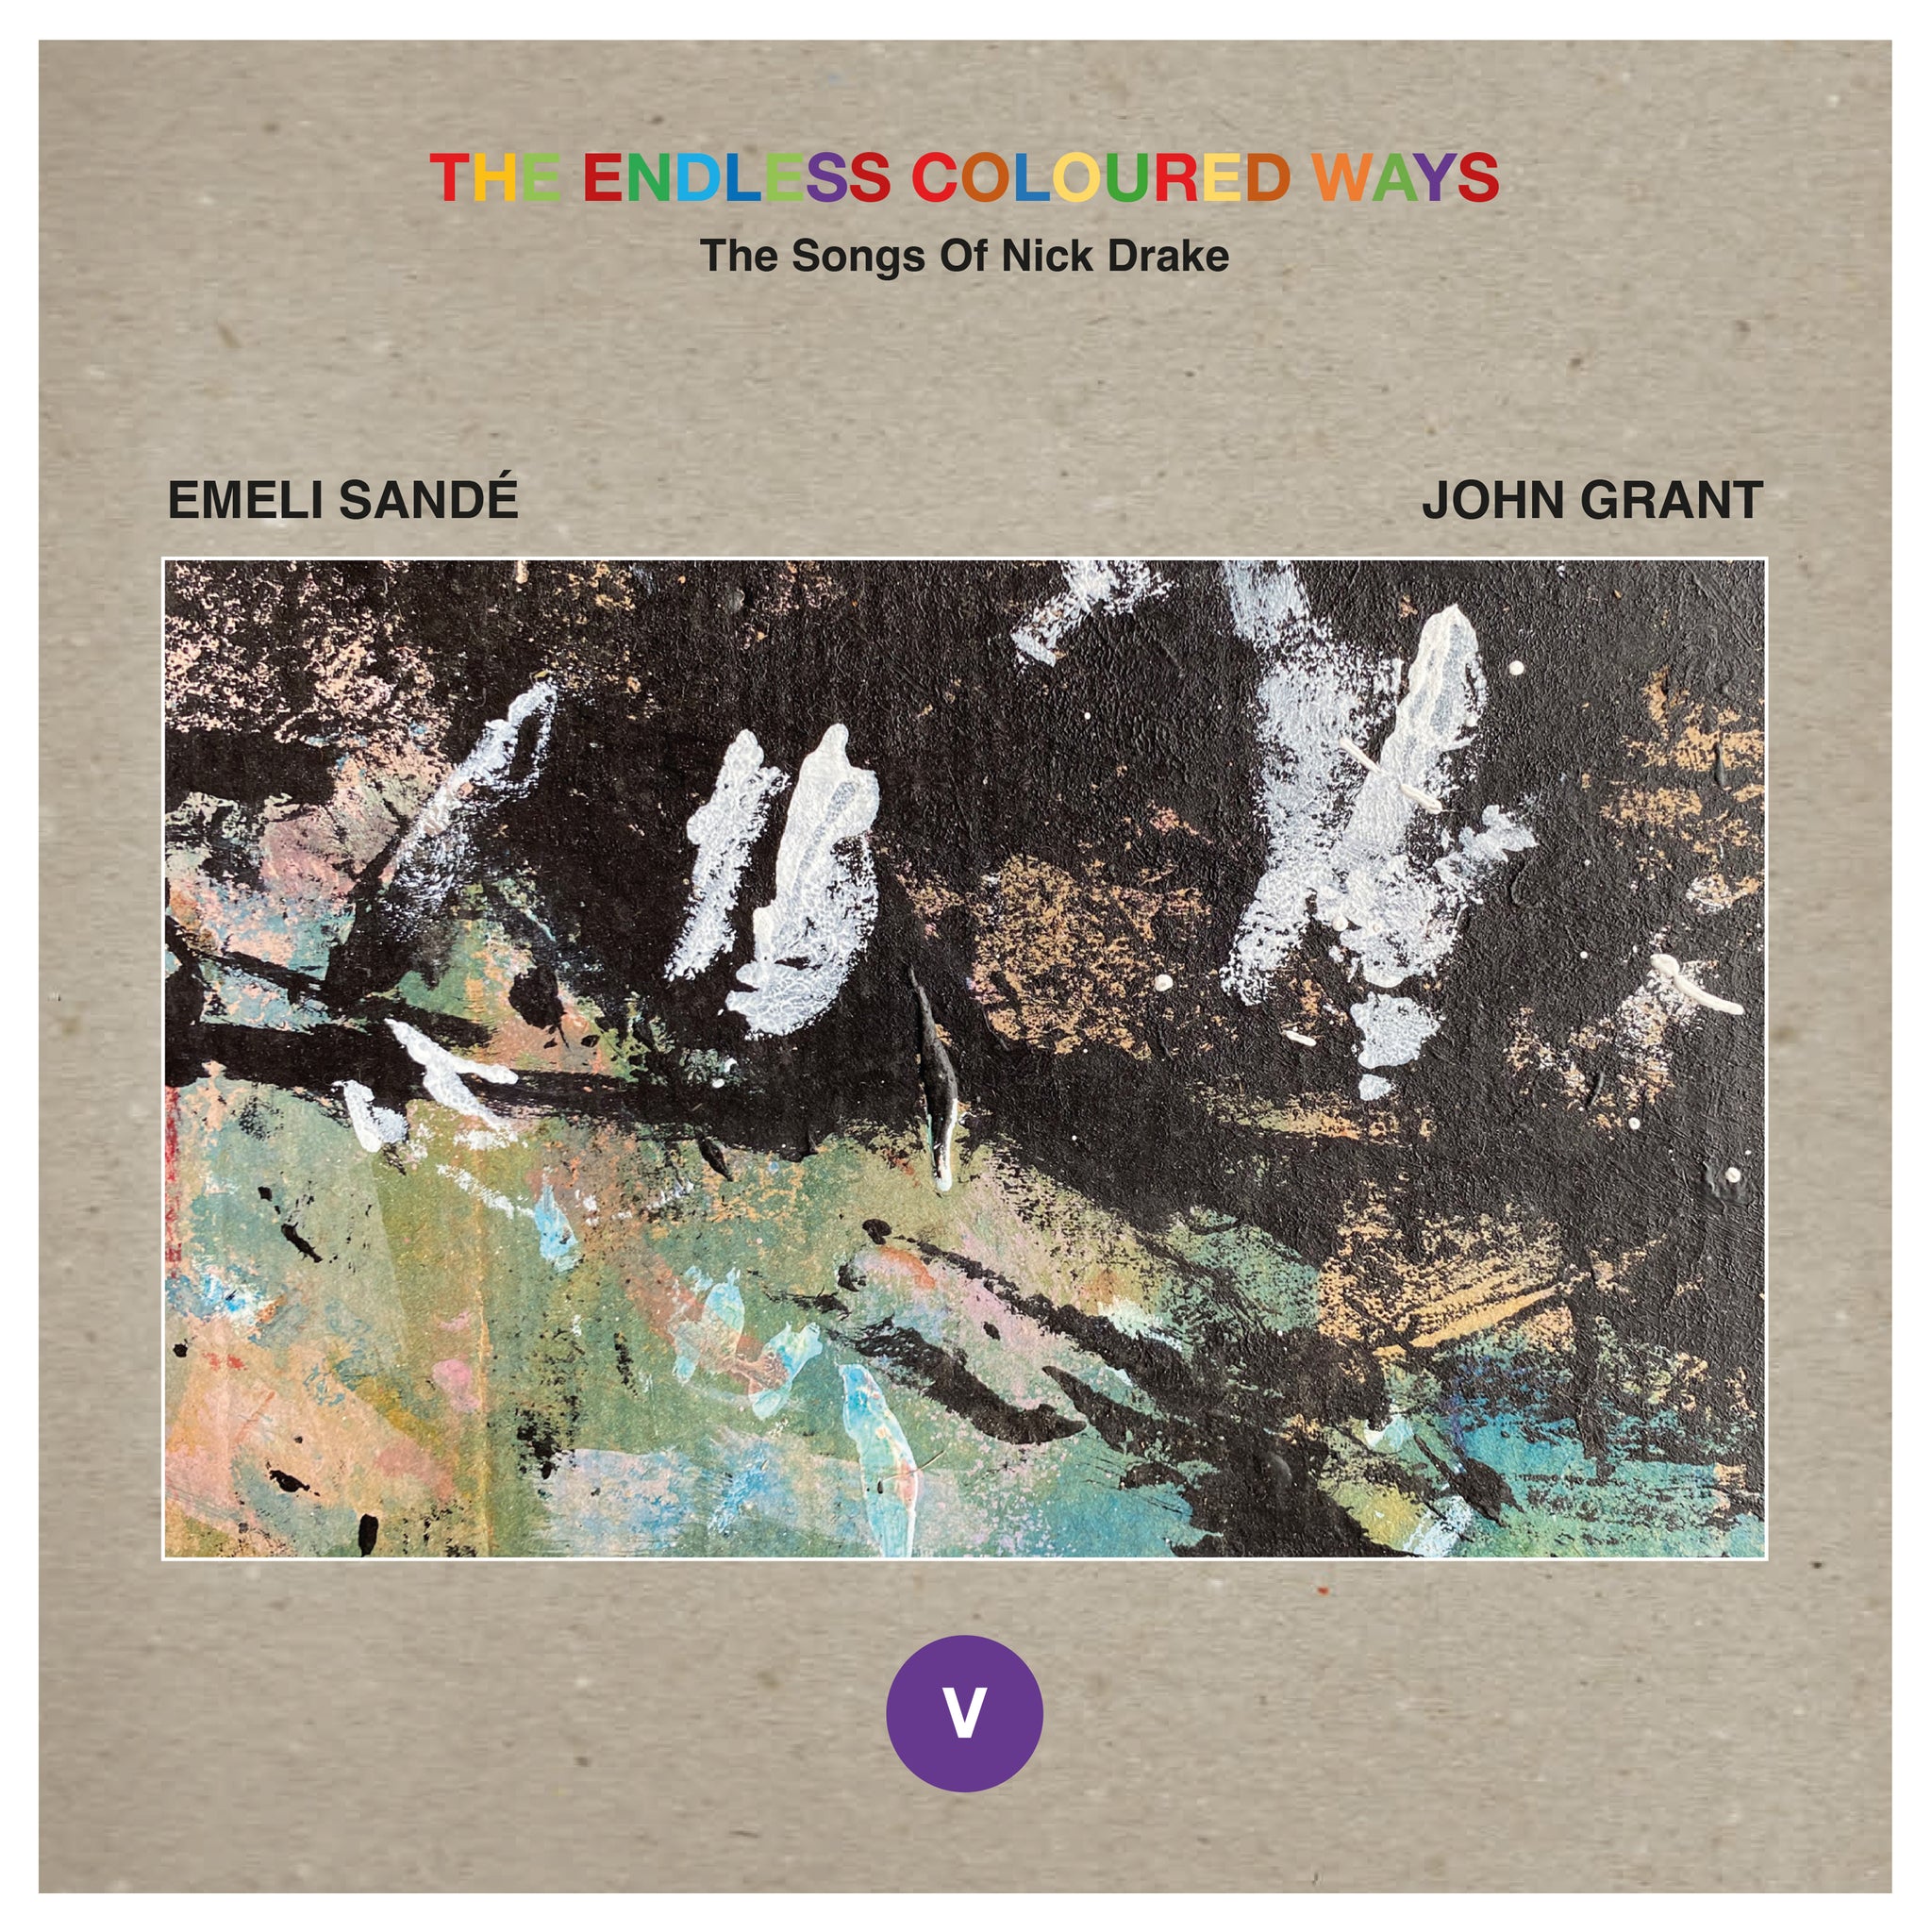 Emeli Sandé b/w John Grant "The Endless Coloured Ways" (Songs of Nick Drake) 7" Single (2023)